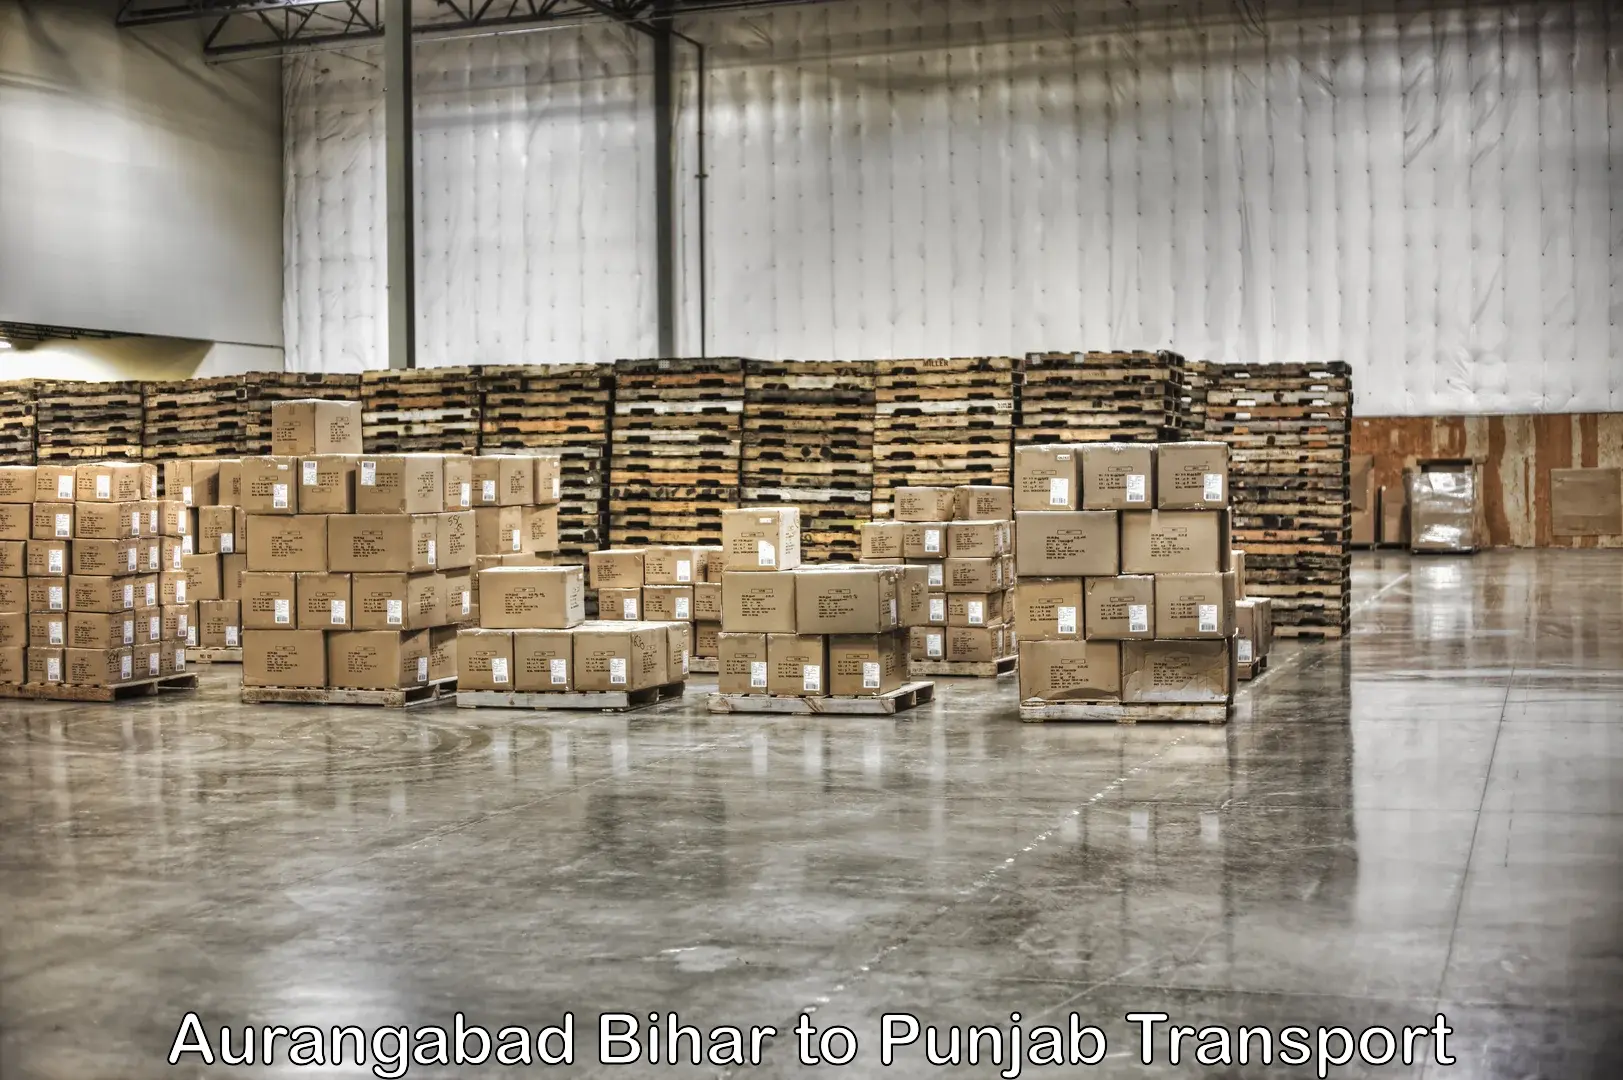 Daily parcel service transport in Aurangabad Bihar to Ludhiana